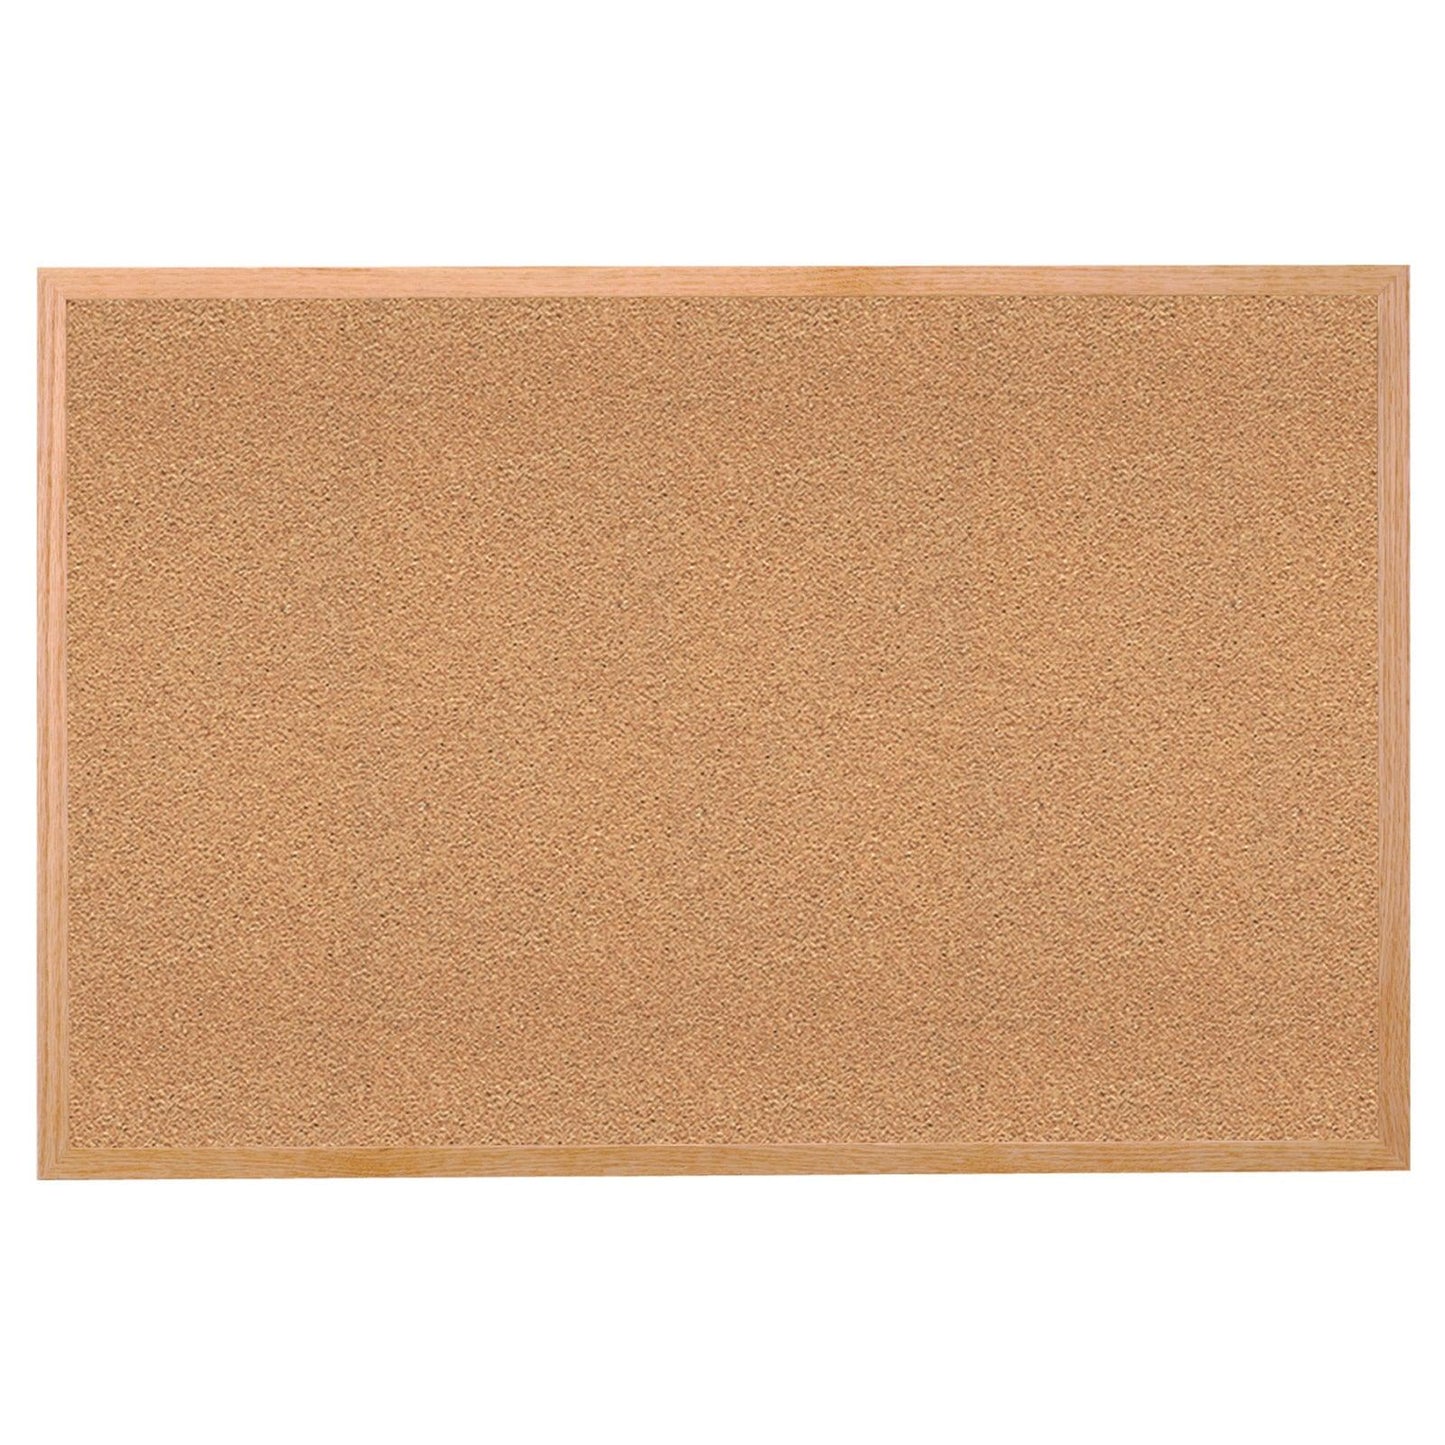 Natural Cork Bulletin Board with Wood Frame, 2'H x 3'W - Loomini